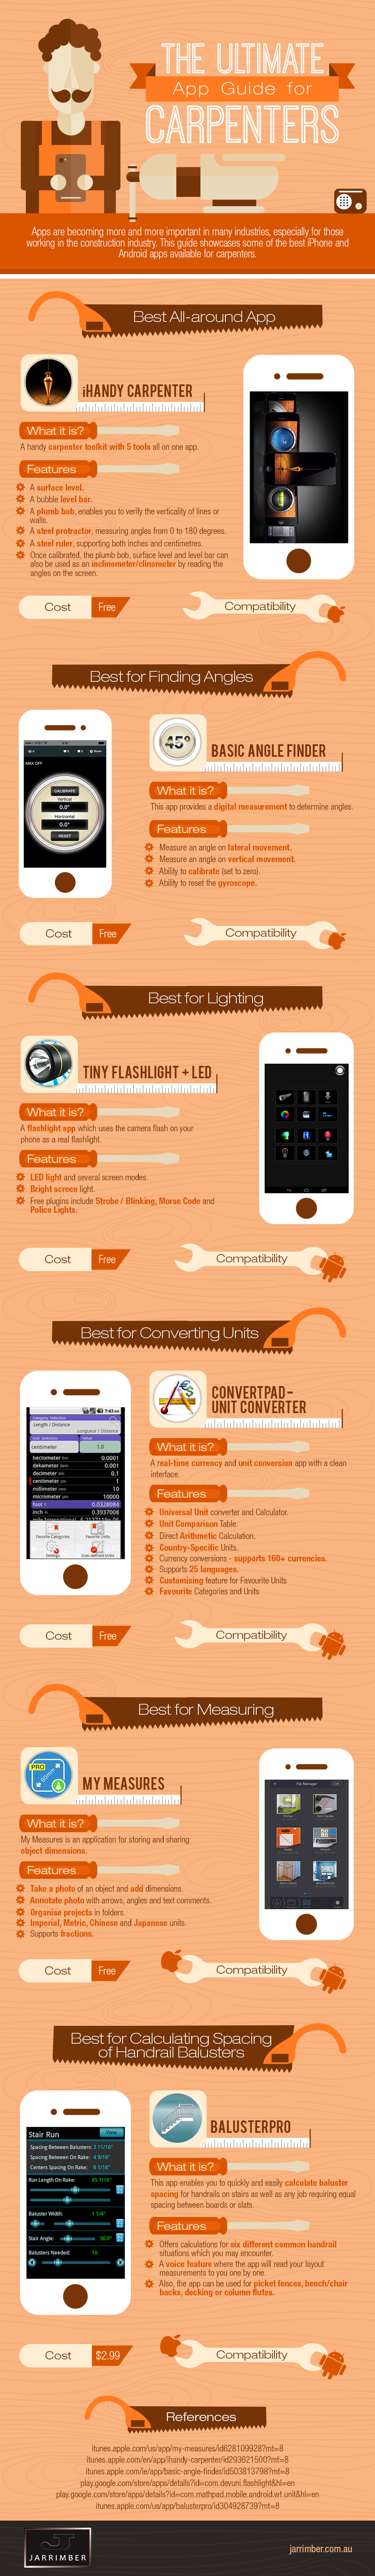 Infographic- App Guide for Carpenters.jpg